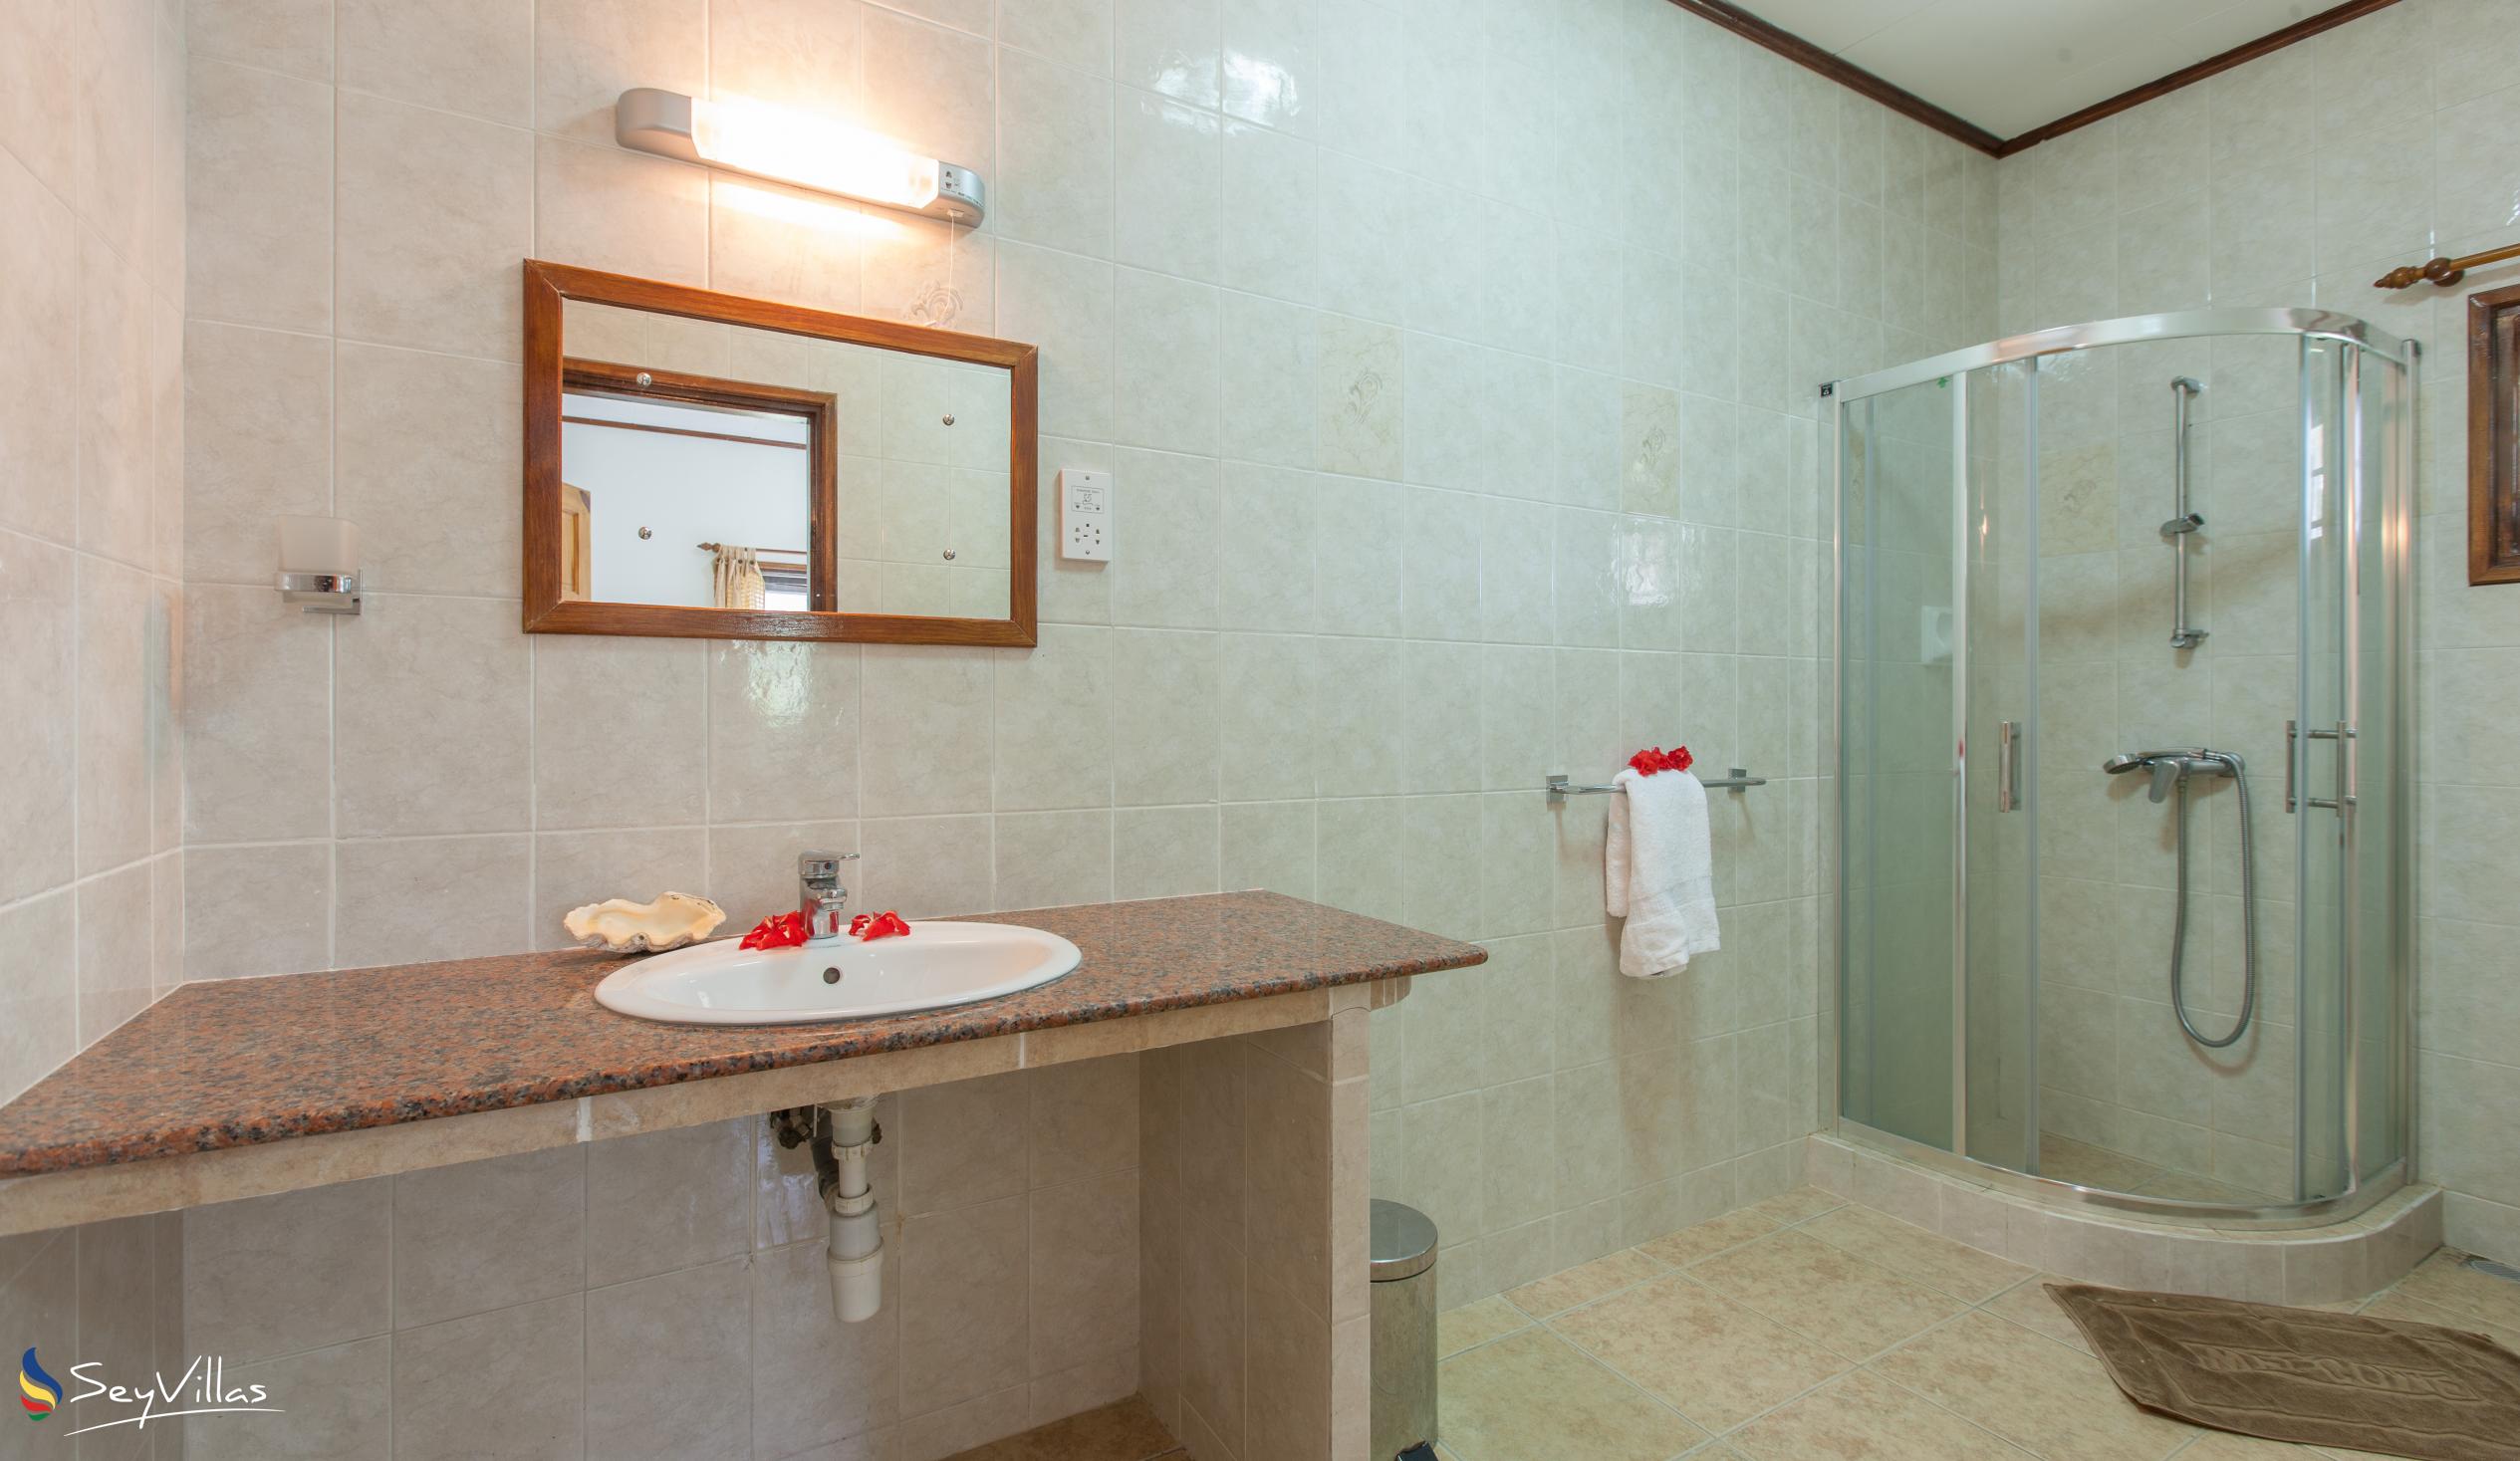 Foto 11: Zerof Self Catering  Apartments - Appartement à 1 chambre - La Digue (Seychelles)